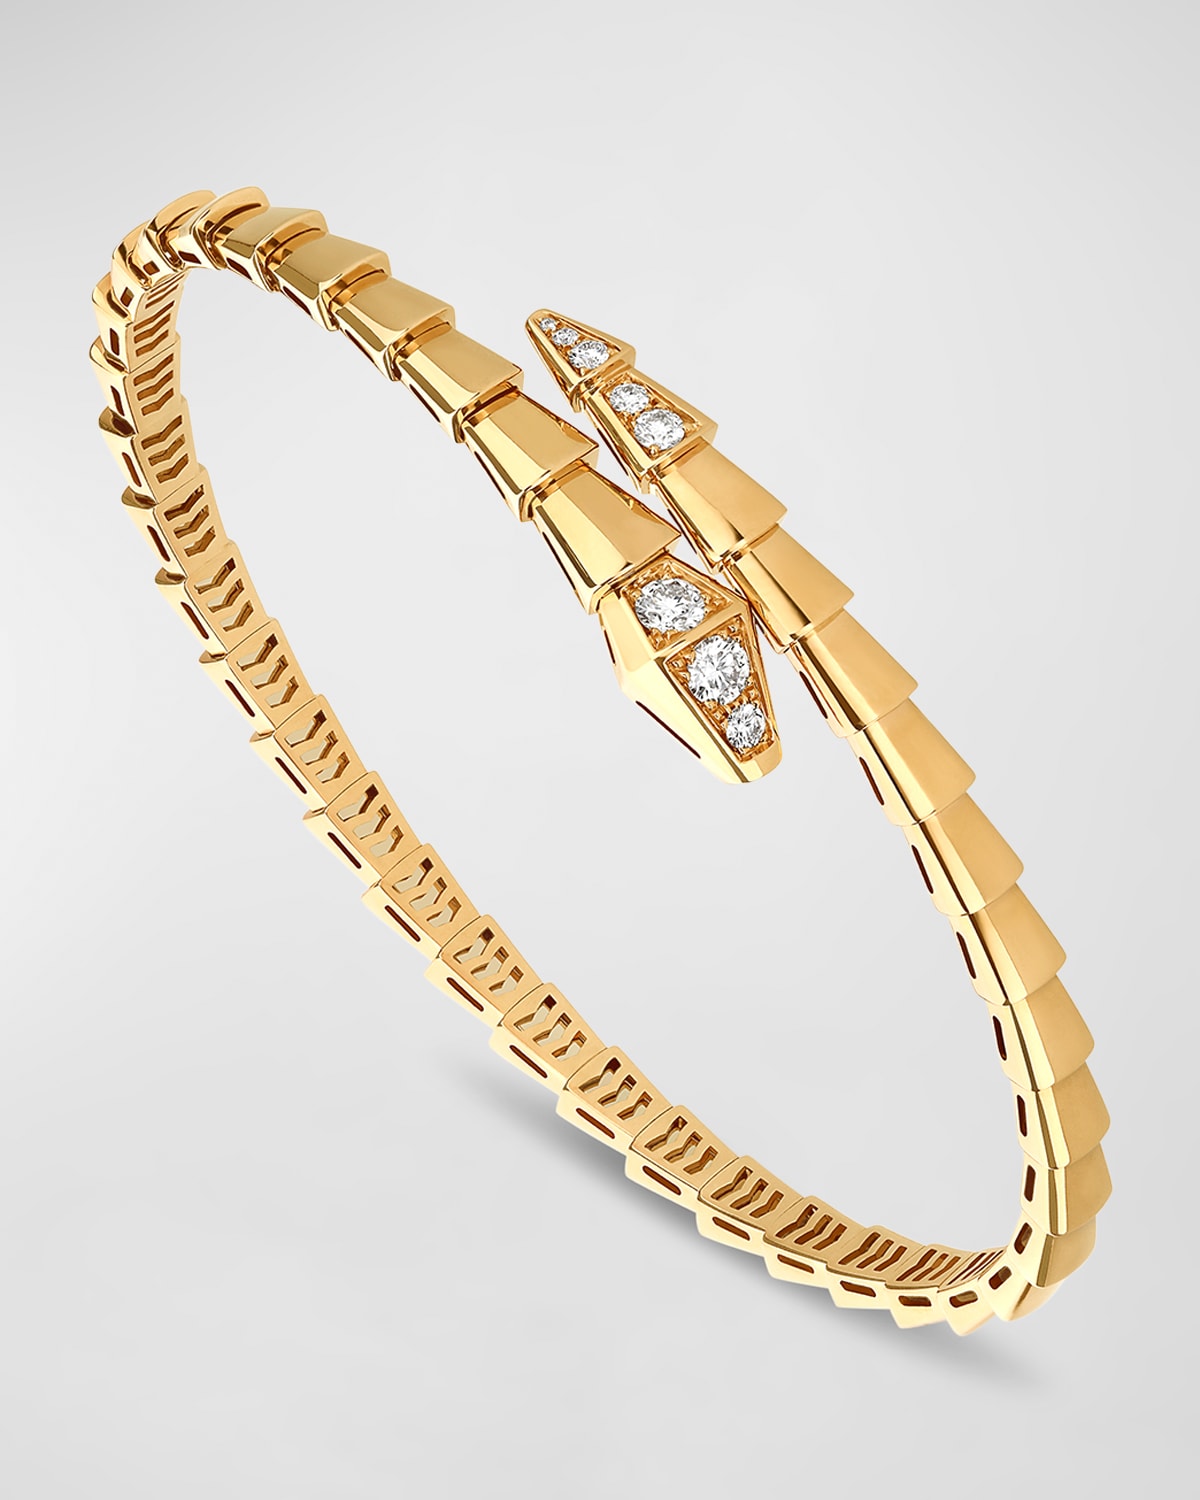 Serpenti Viper 18K Yellow Gold Bracelet with Diamonds, Size L